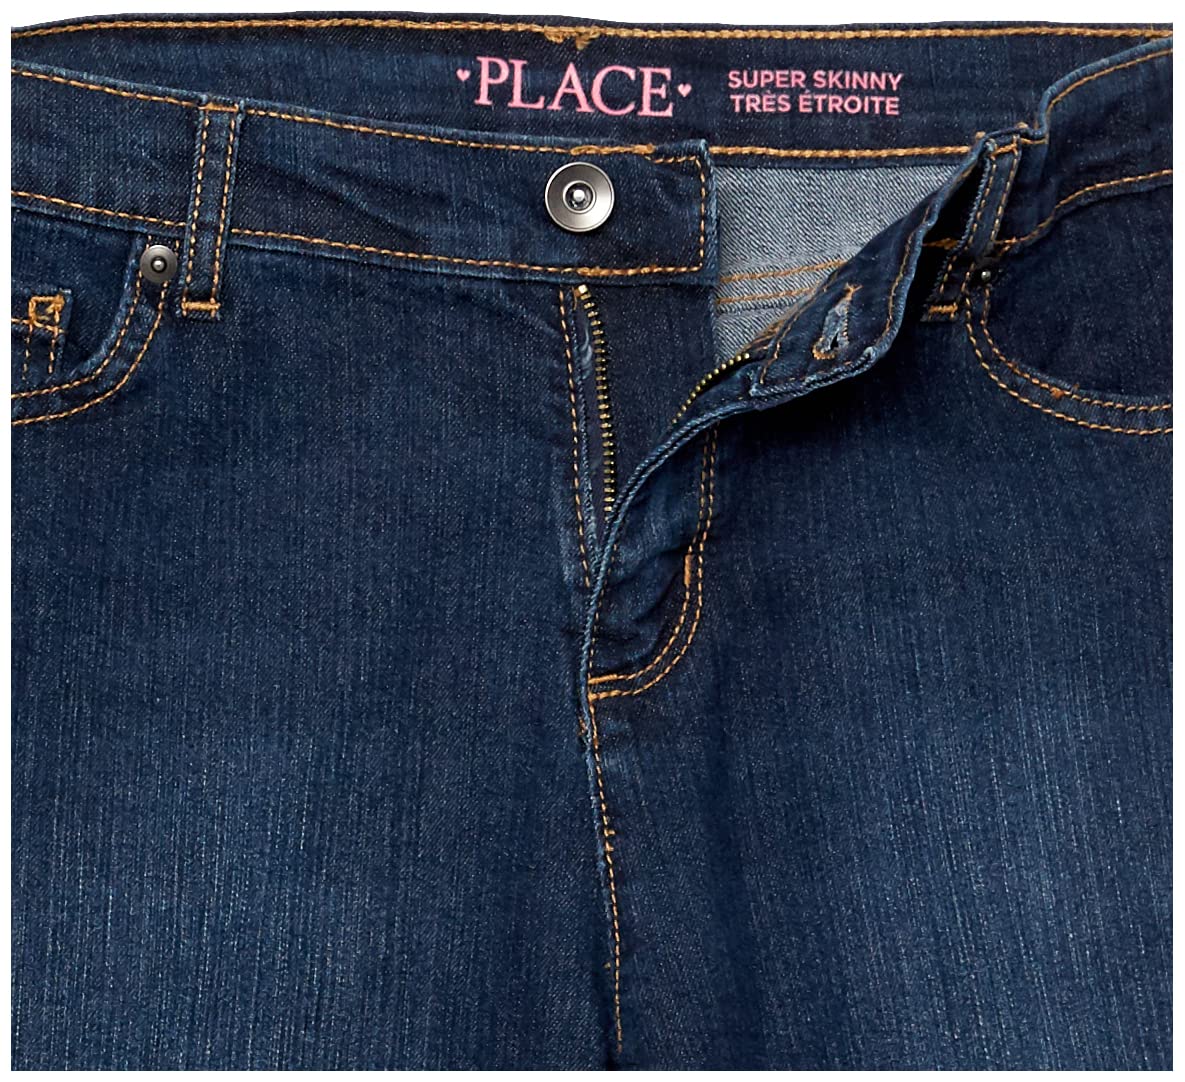 The Children's Place Girls Super Skinny Jeans,Black Wash/Dk Twlight/Victory Blue Wash/Sky Wash 4 Pack,6X/7